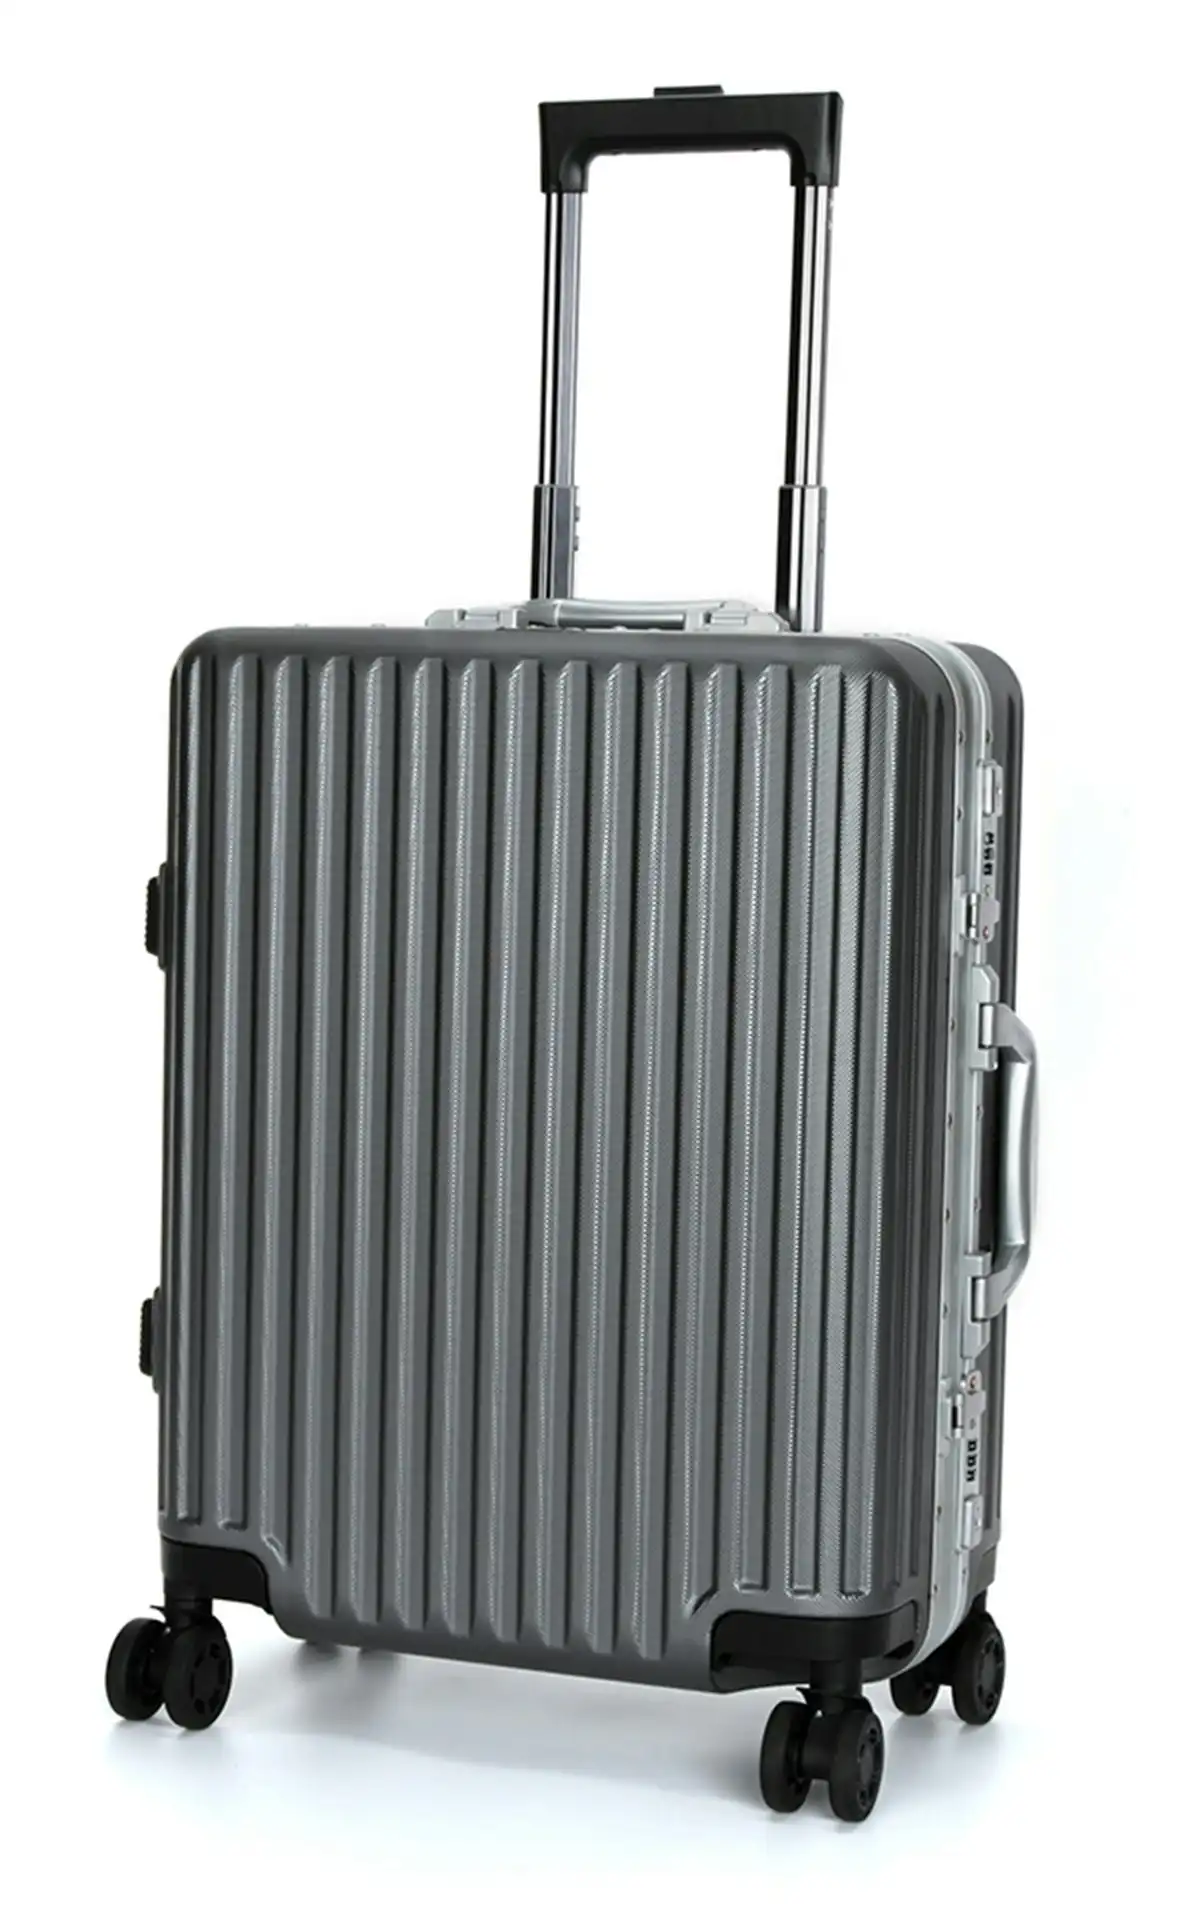 Suissewin Swiss Aluminium Luggage Suitcase Lightweight With TSA Locker 8 Wheel Carry on Hardcase SN7619A Silver Grey